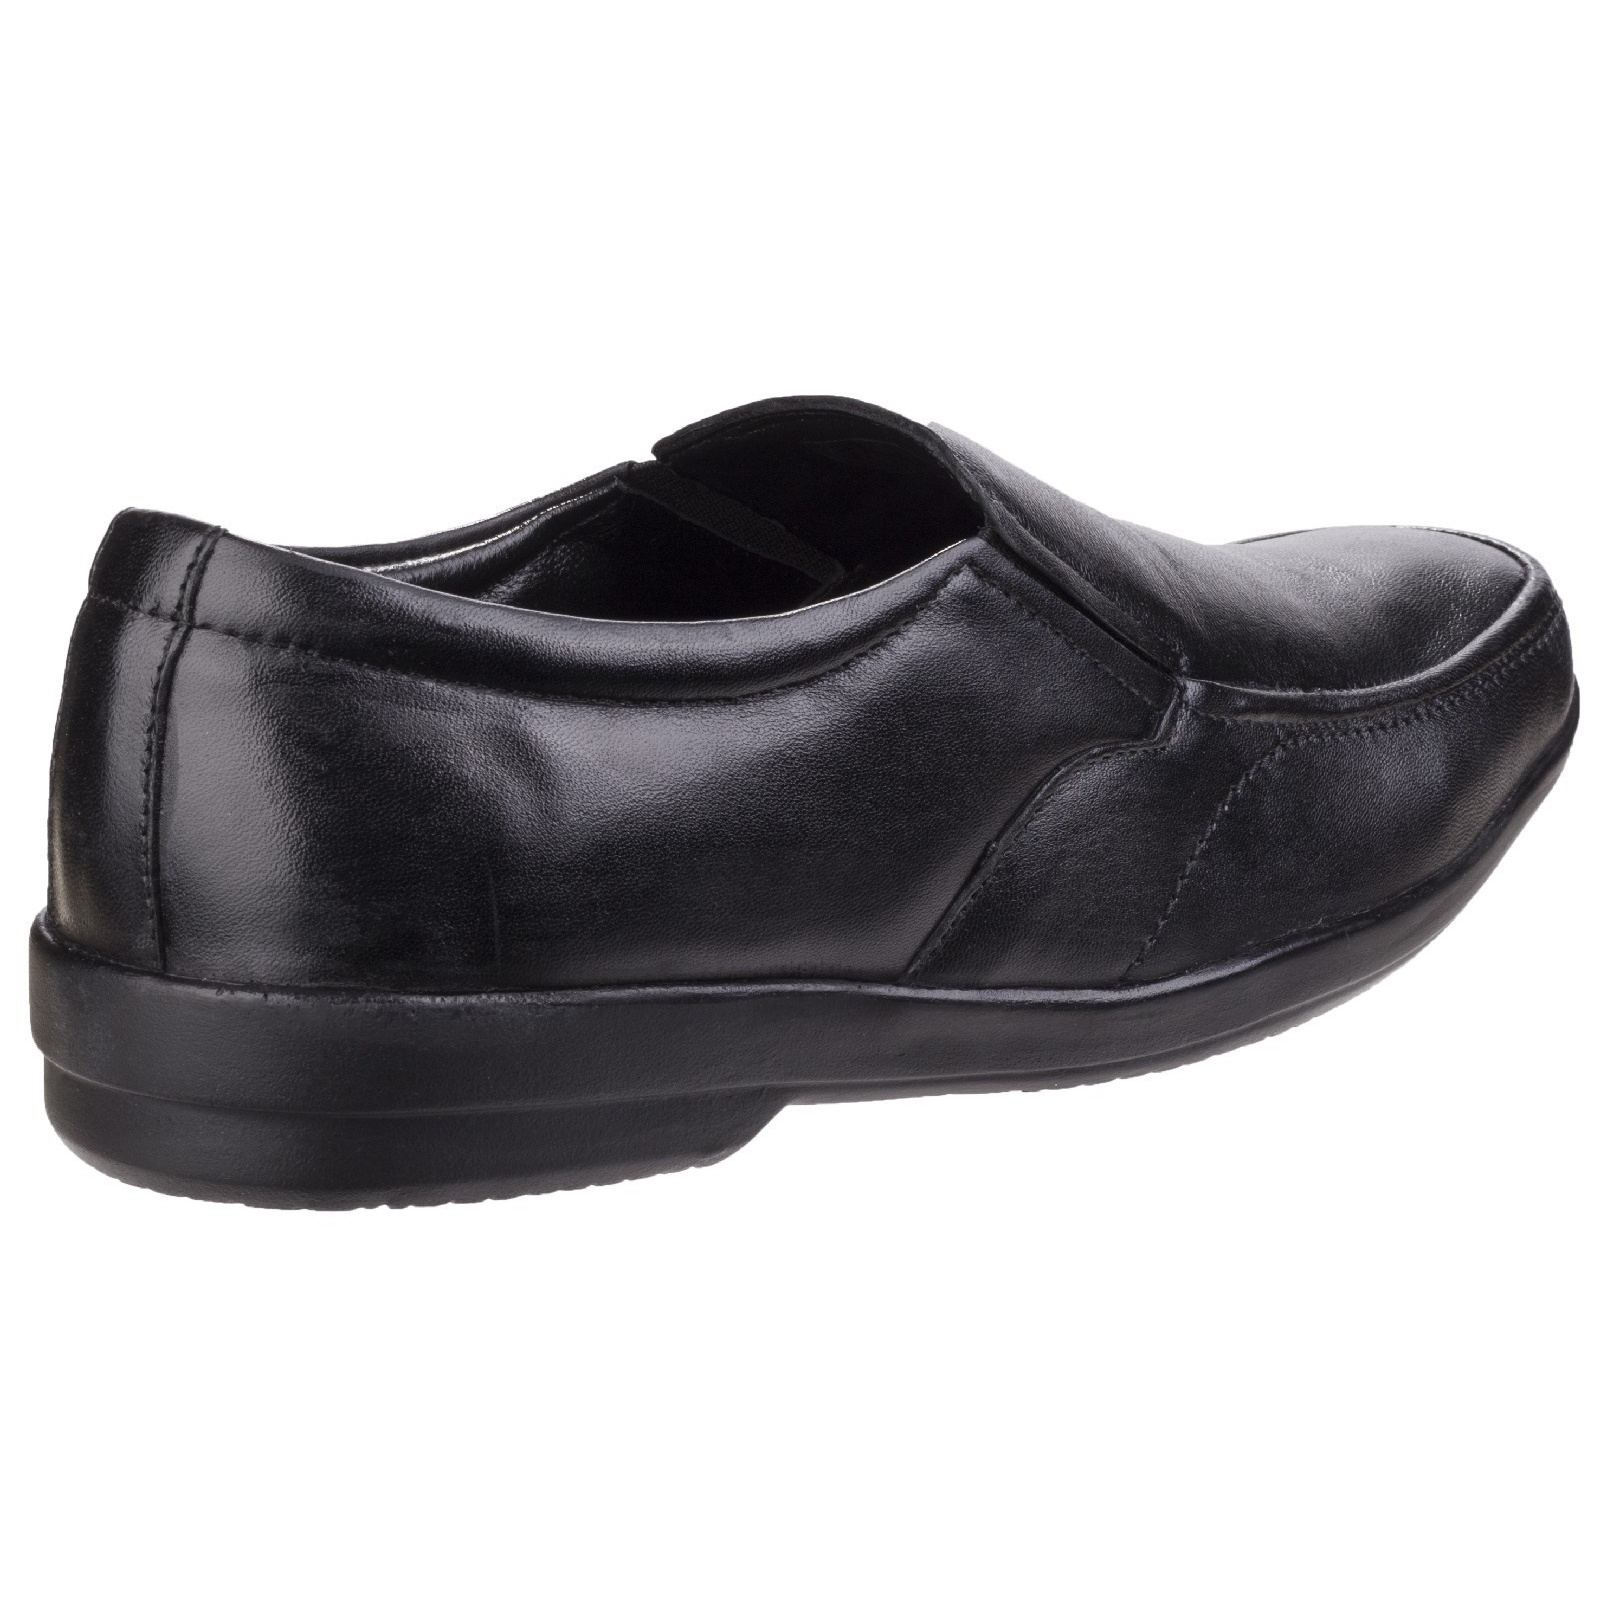 Fleet & Foster Mens Alan Formal Apron Toe Slip On Shoes - image 5 of 6